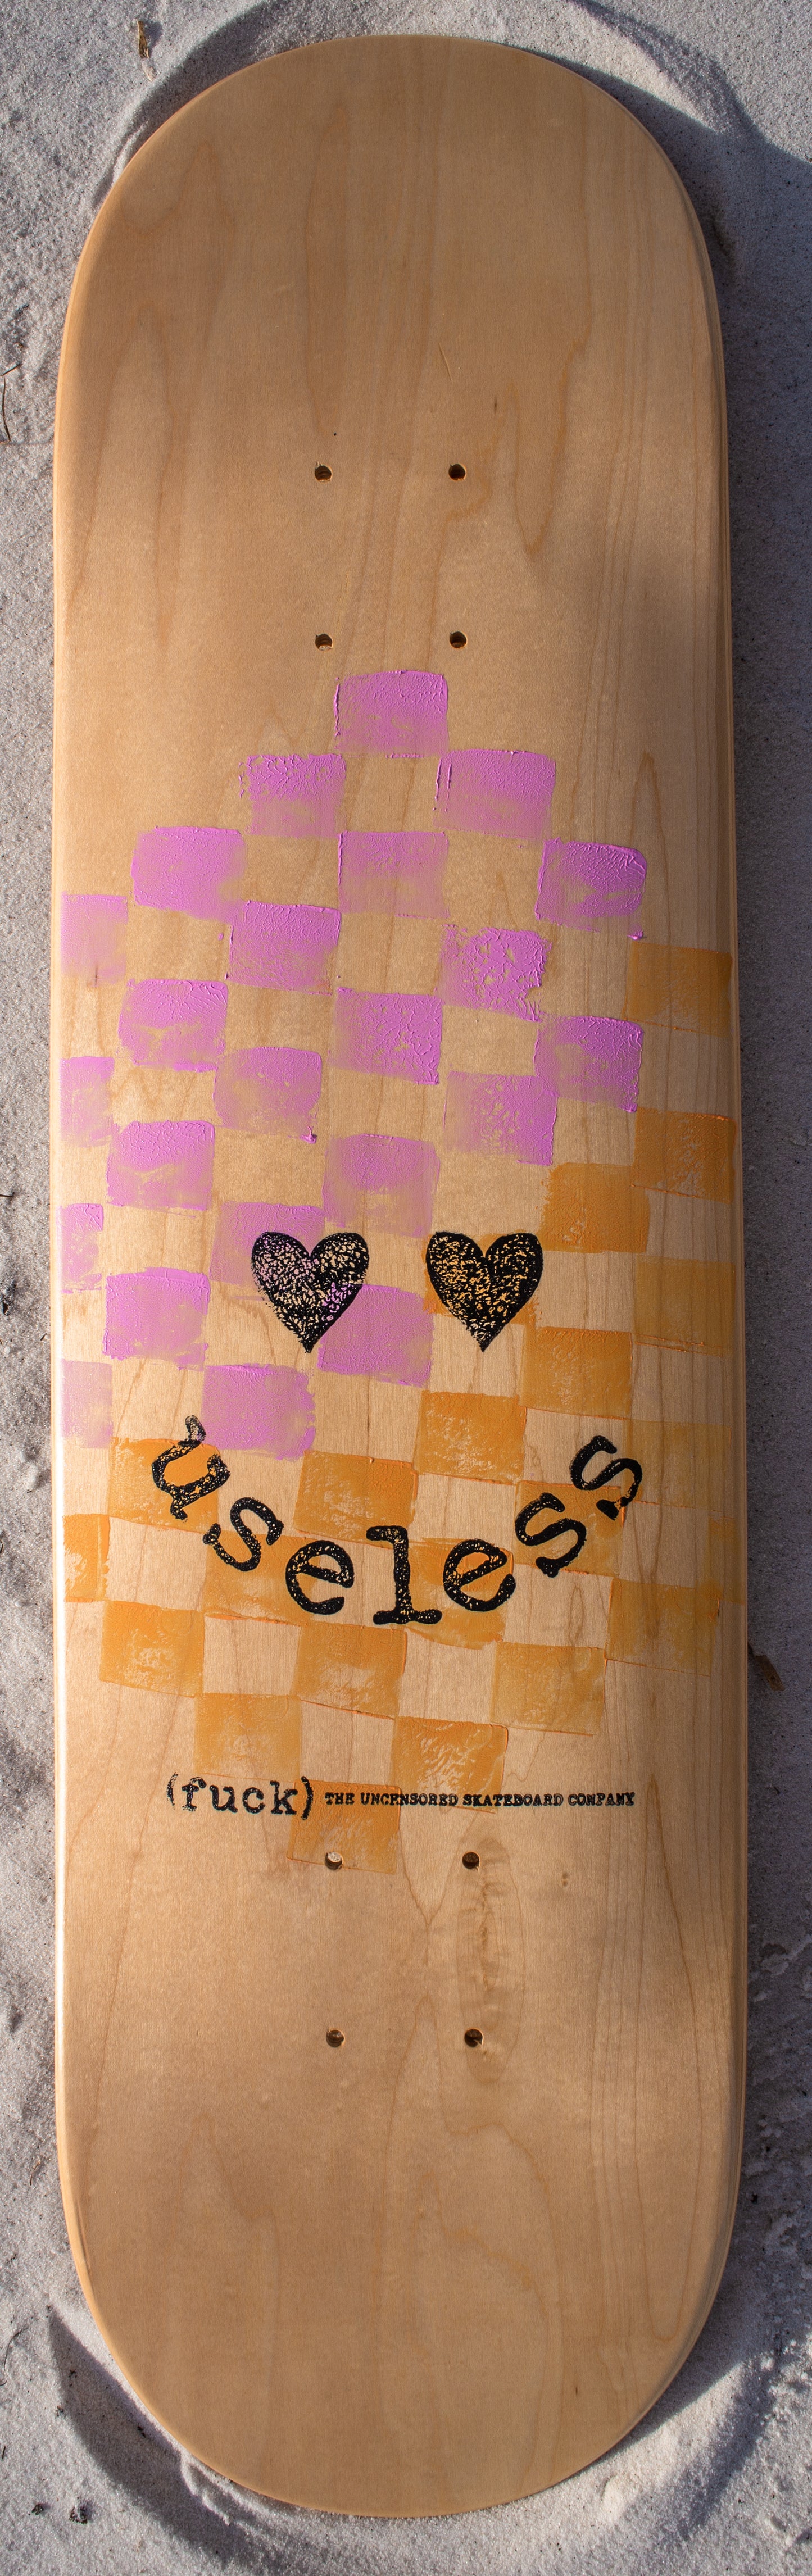 useless(fuck) Pink & Yellow Checker 8.13 Deck